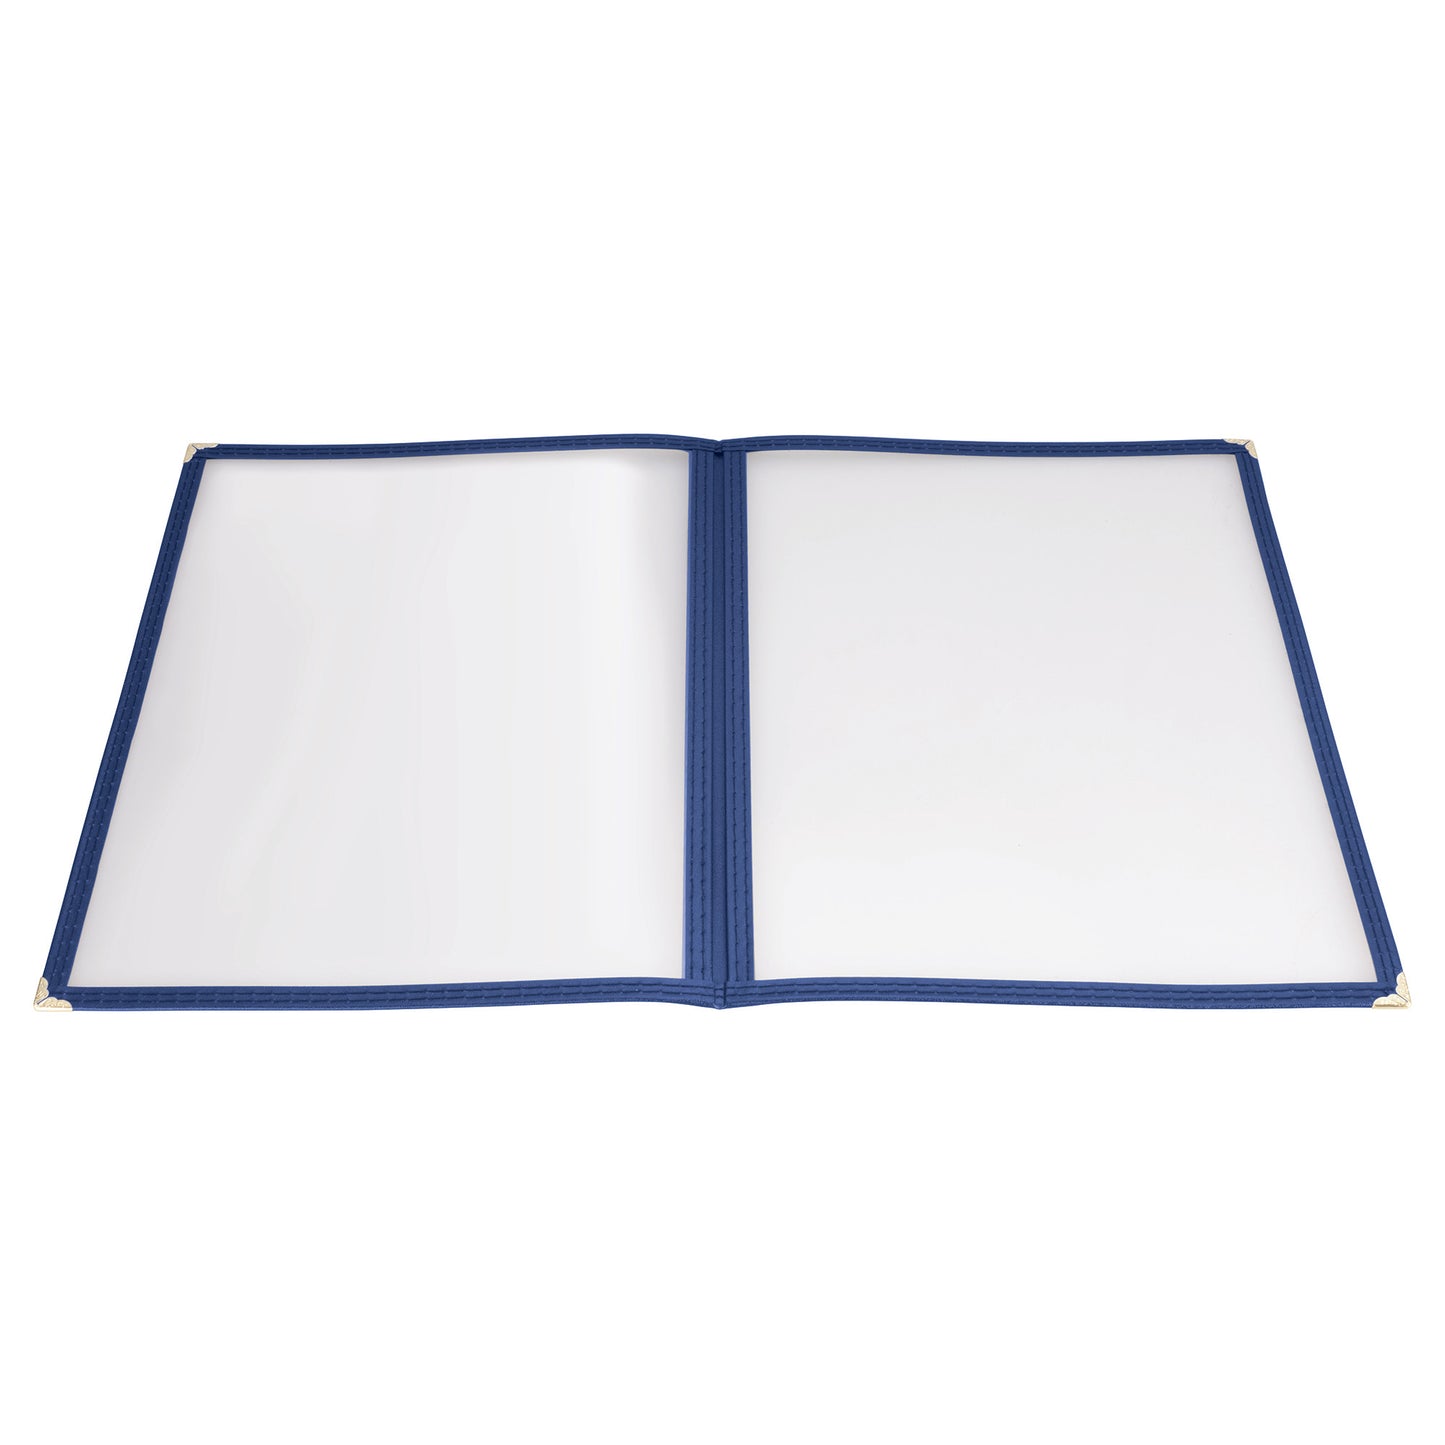 PMCD-9B - Book-Fold Double Panel Menu Cover - Blue, 9-3/8 x 12-1/8